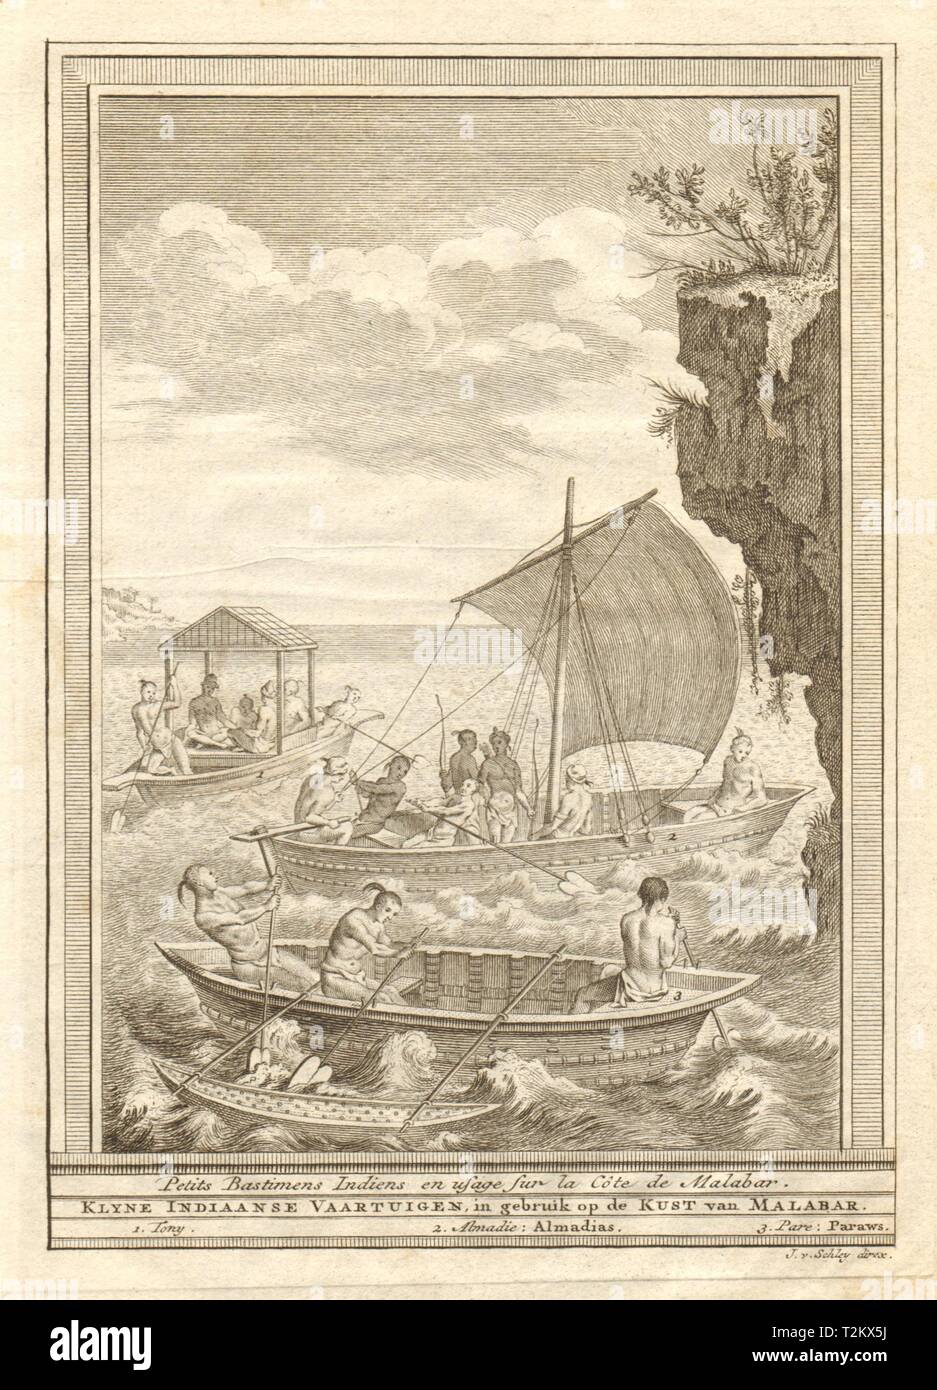 Bâtimens Indiens… côte de Malabar' coast boat raft paraw. India SCHLEY 1747  Stock Photo - Alamy